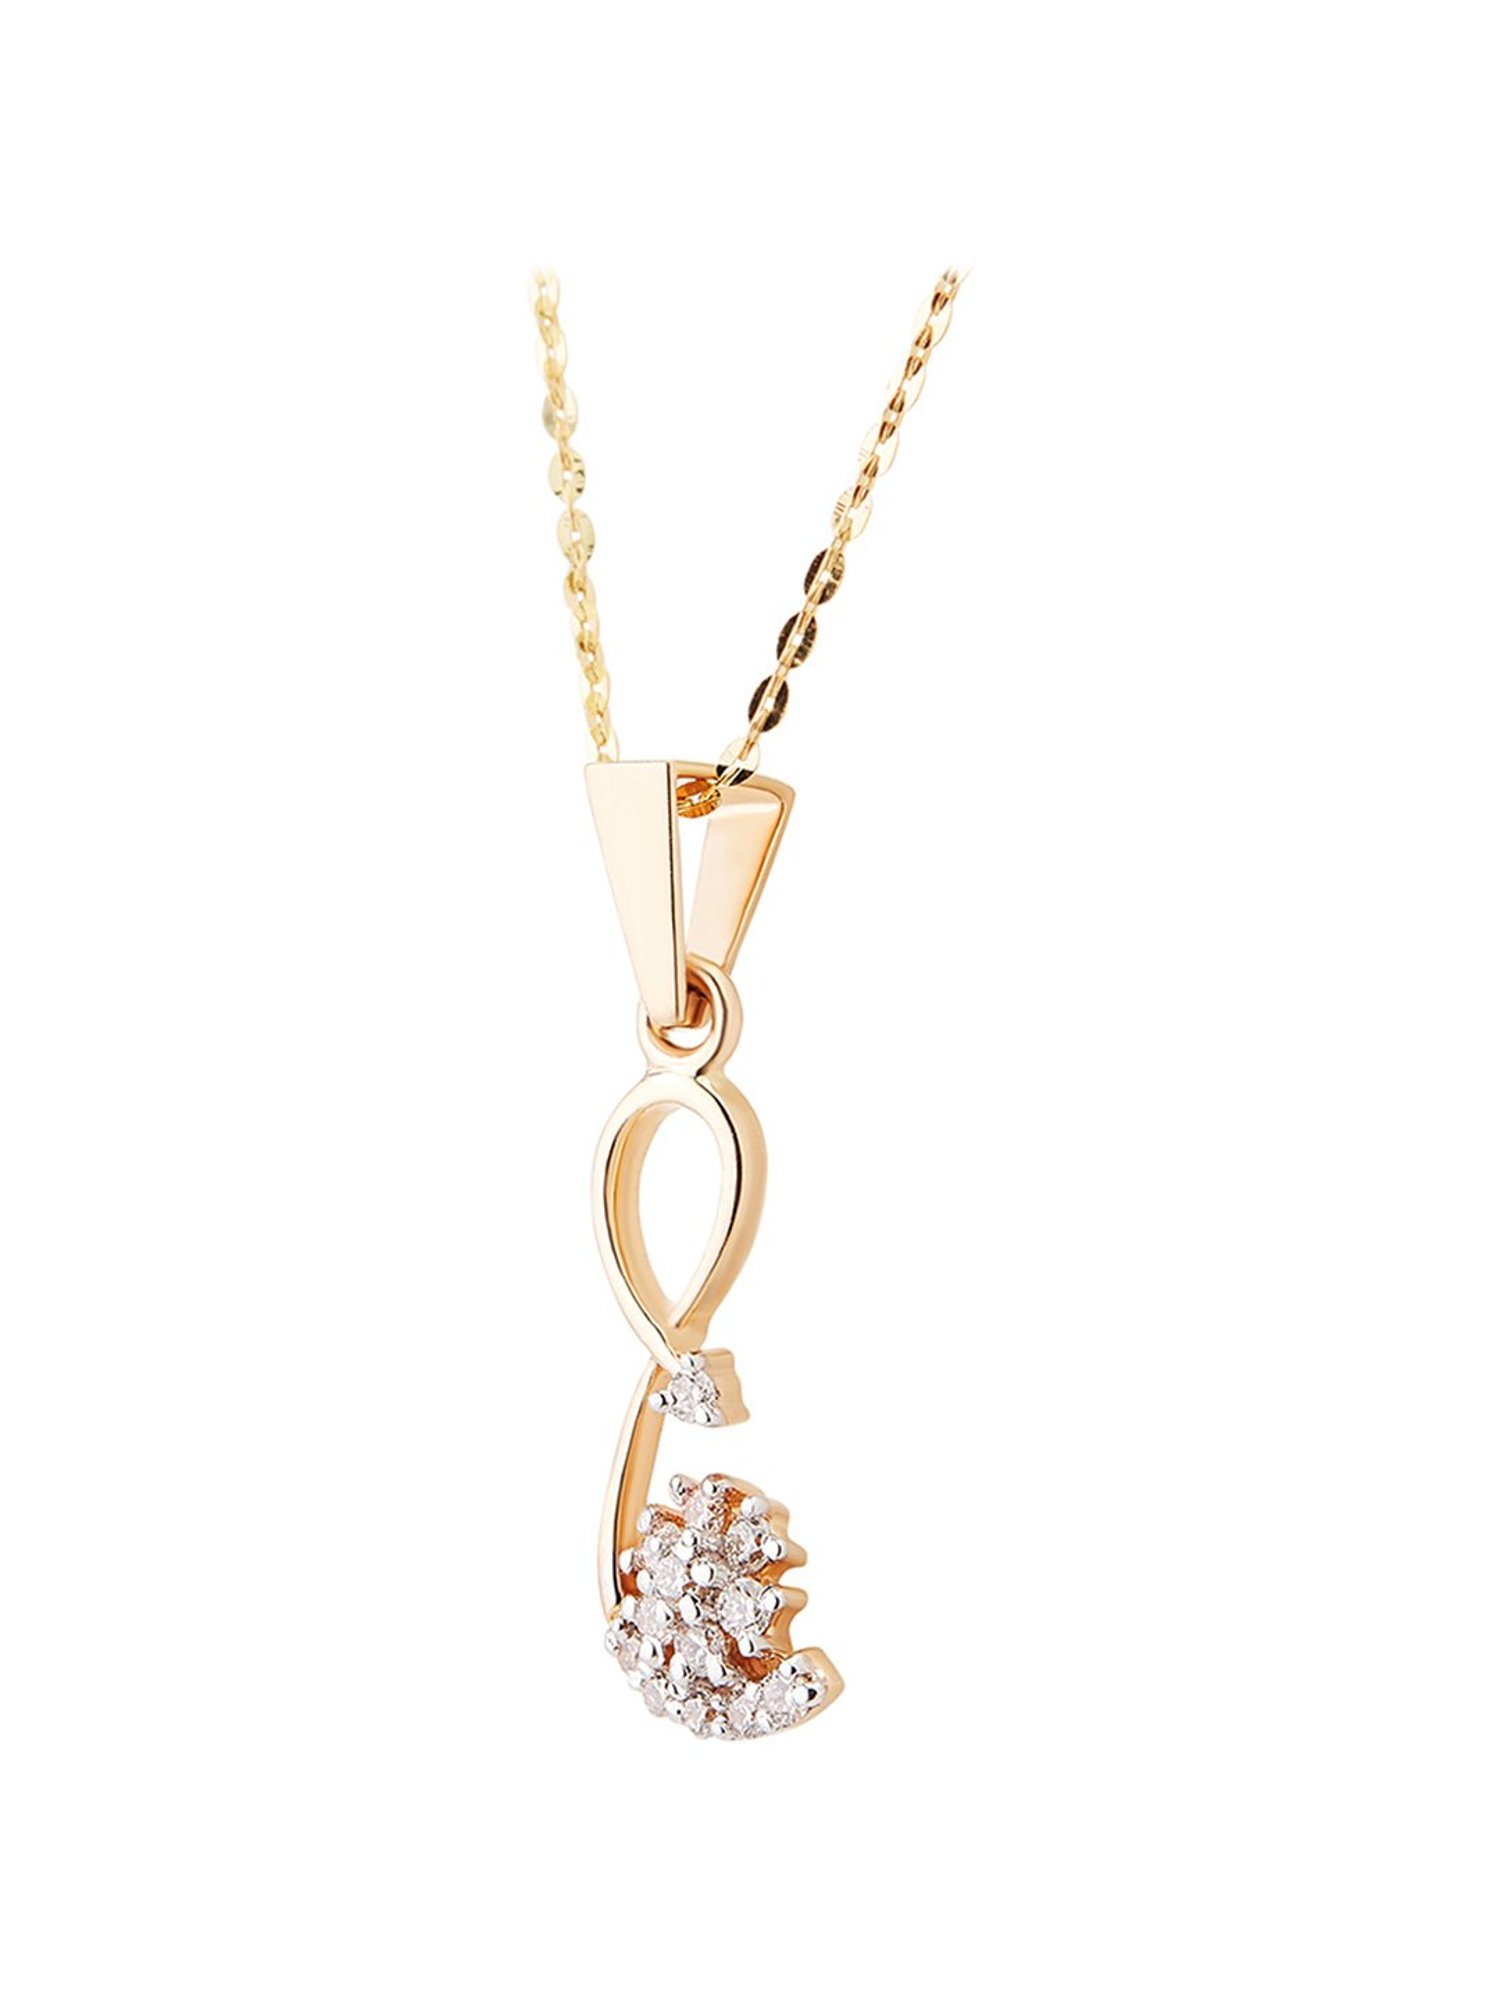 14K W&Y Gold Diamond Padlock Pendant Necklace - 18